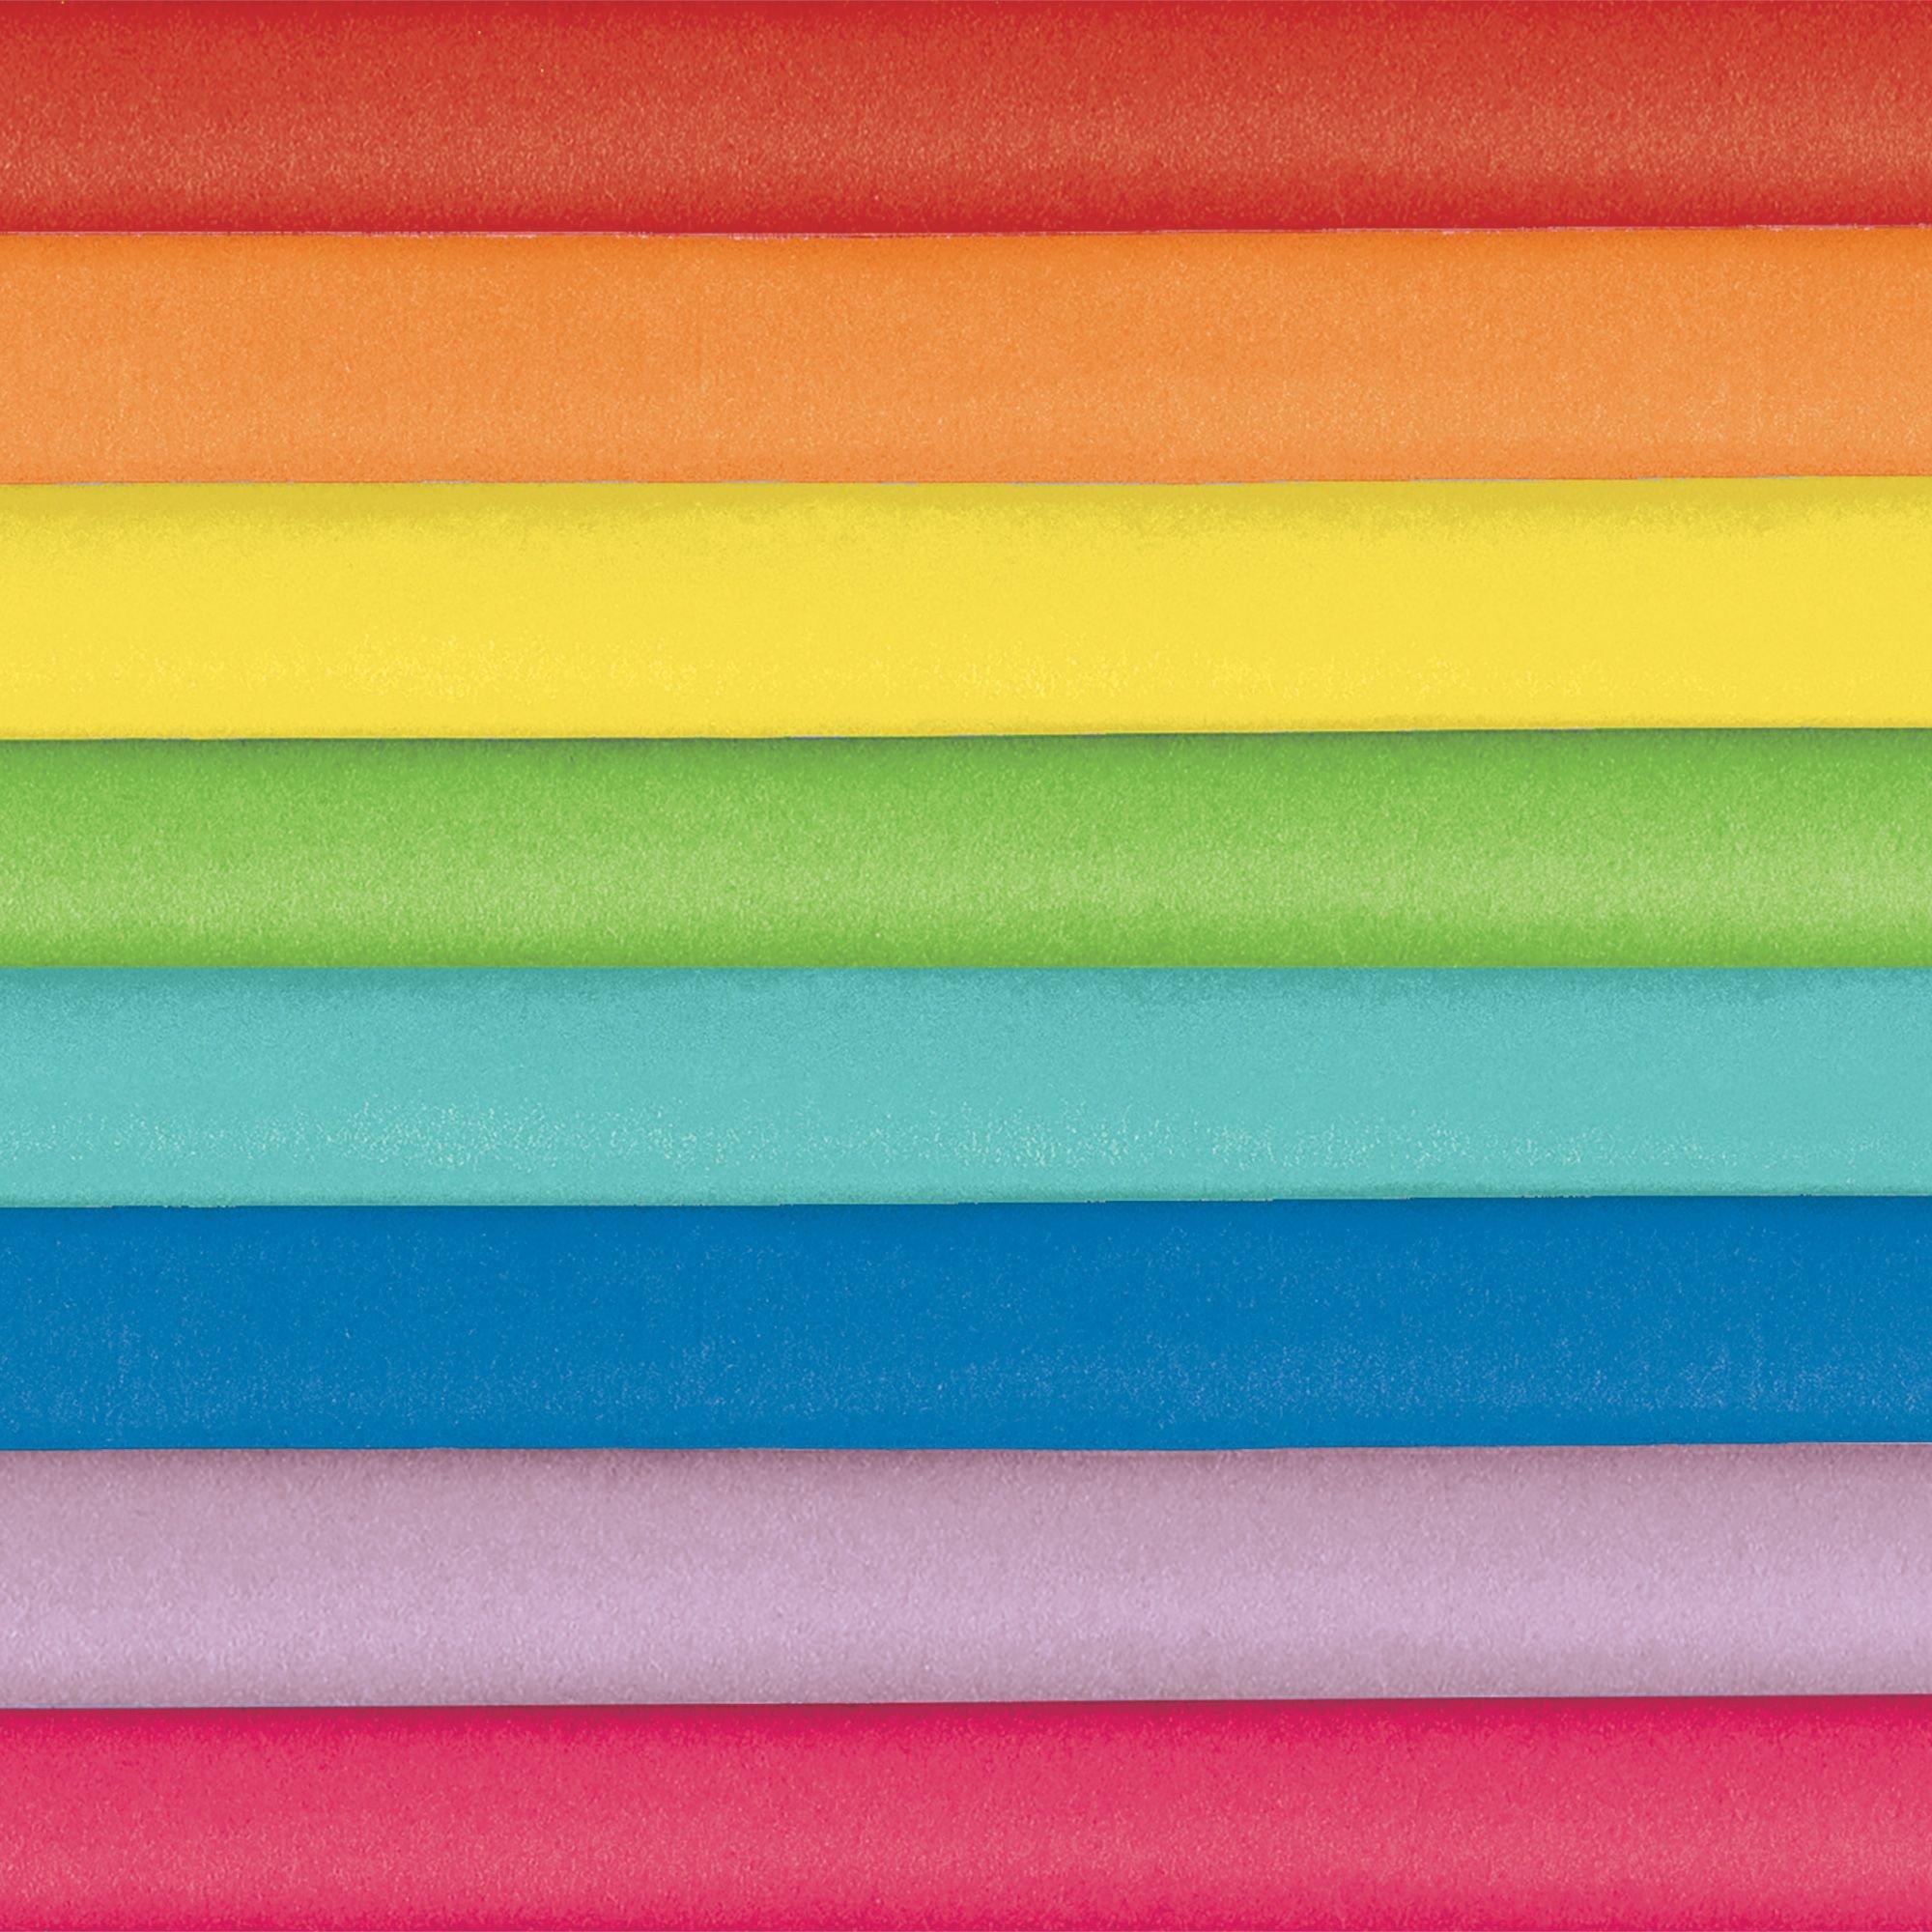 Rainbow Tissue Paper 12 Sheets